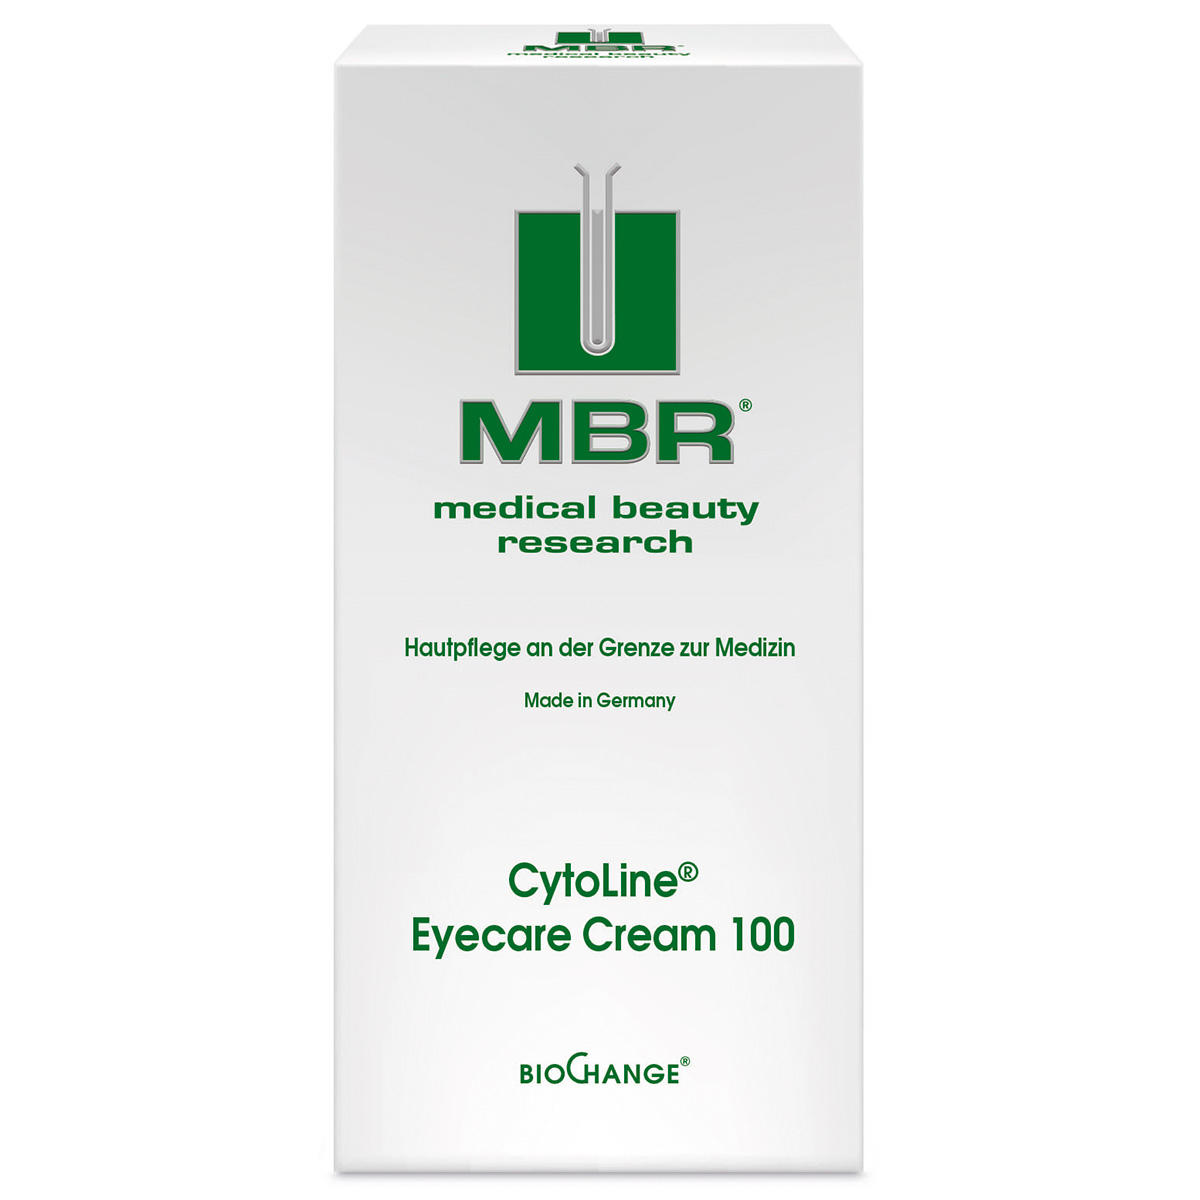 MBR Medical Beauty Research BioChange CytoLine Eyecare Cream 100 15 ml - 2